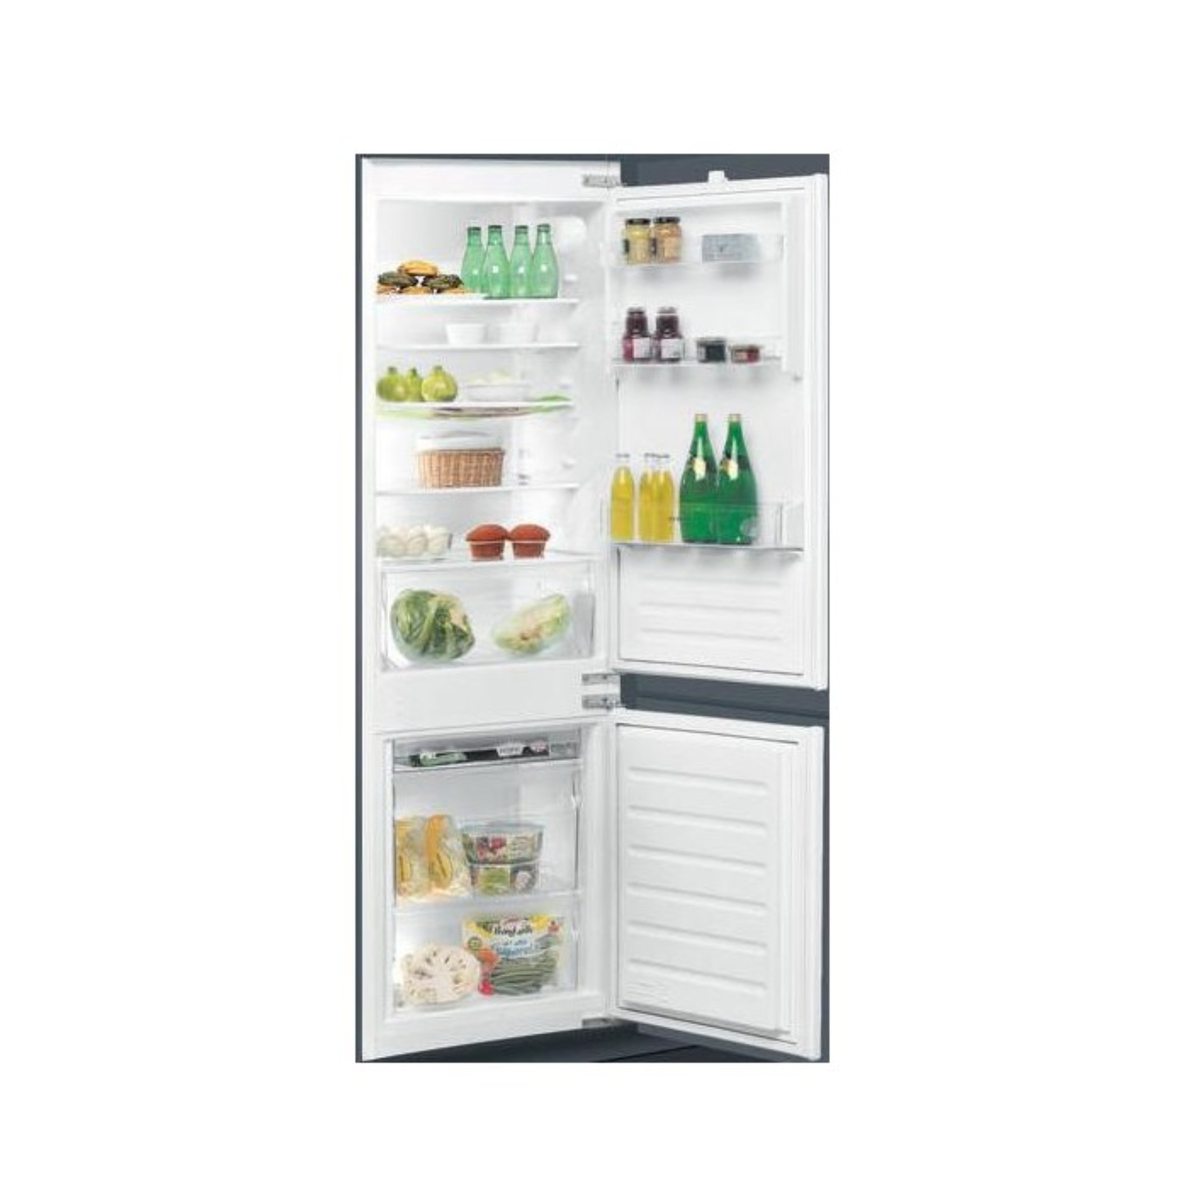 Ignis Built-in Refrigerator, 247 L, Inox, ARL6501/A